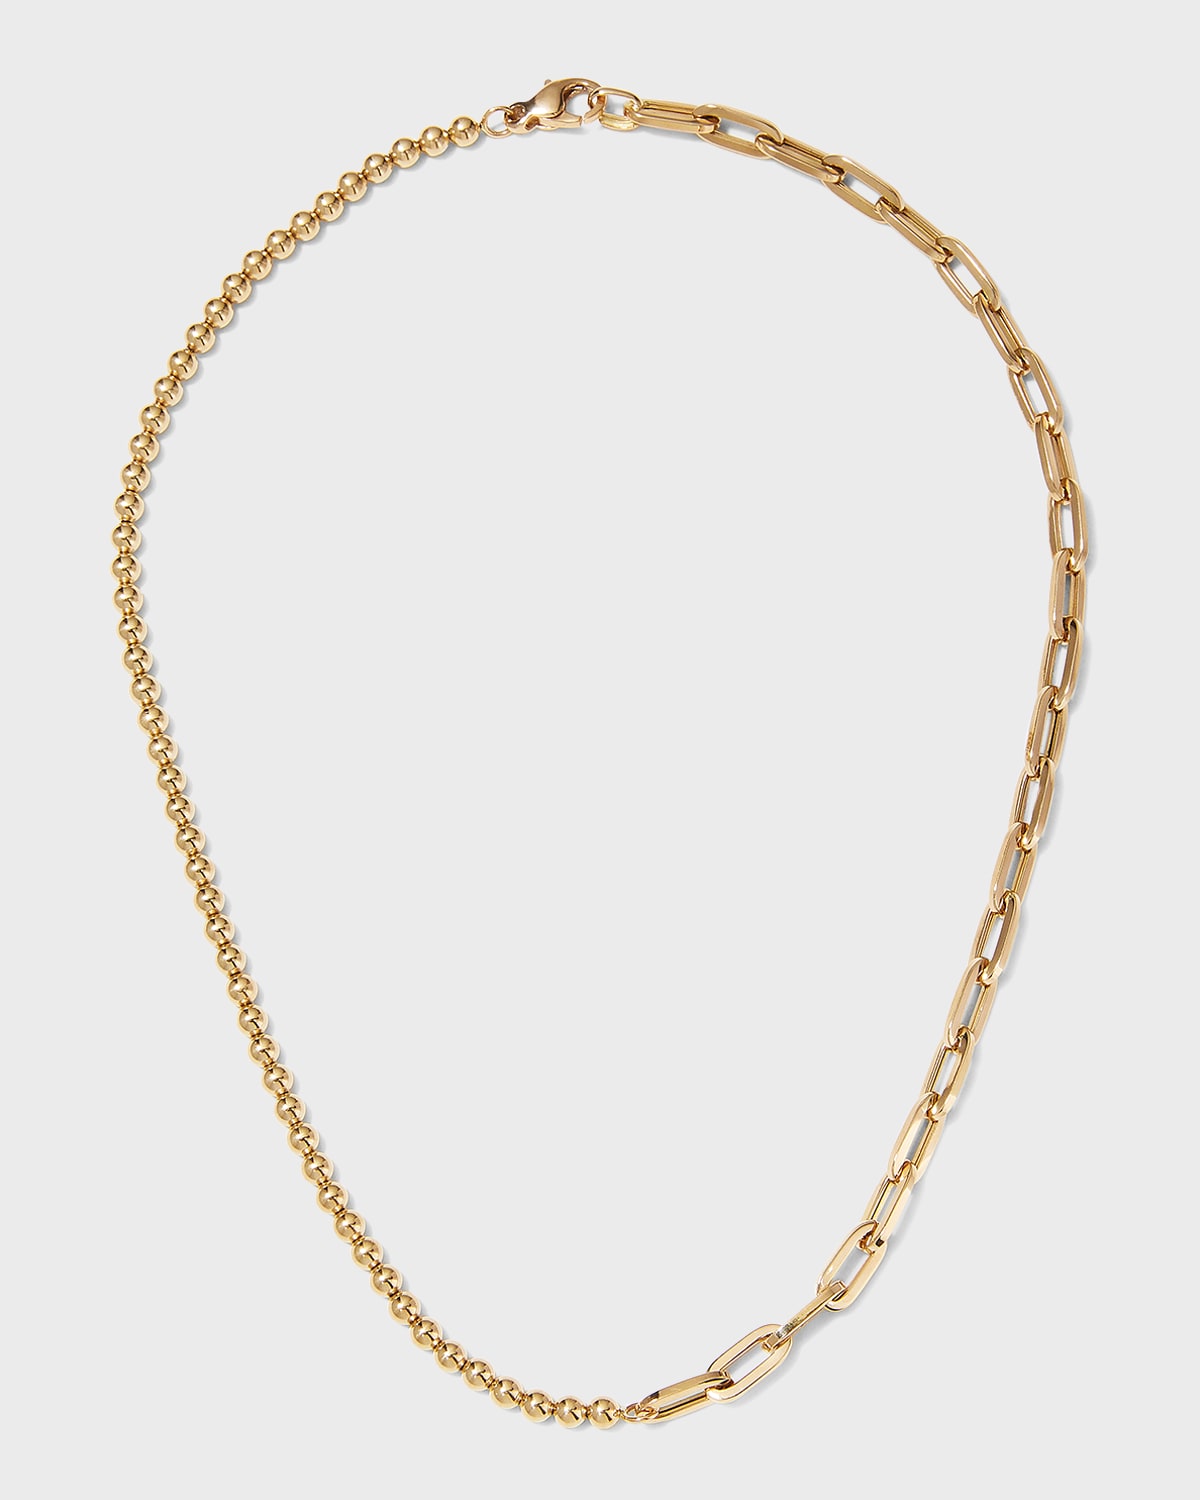 Fern Freeman Jewelry Yellow Gold Half Small Ball Half Small Oval-Link Necklace